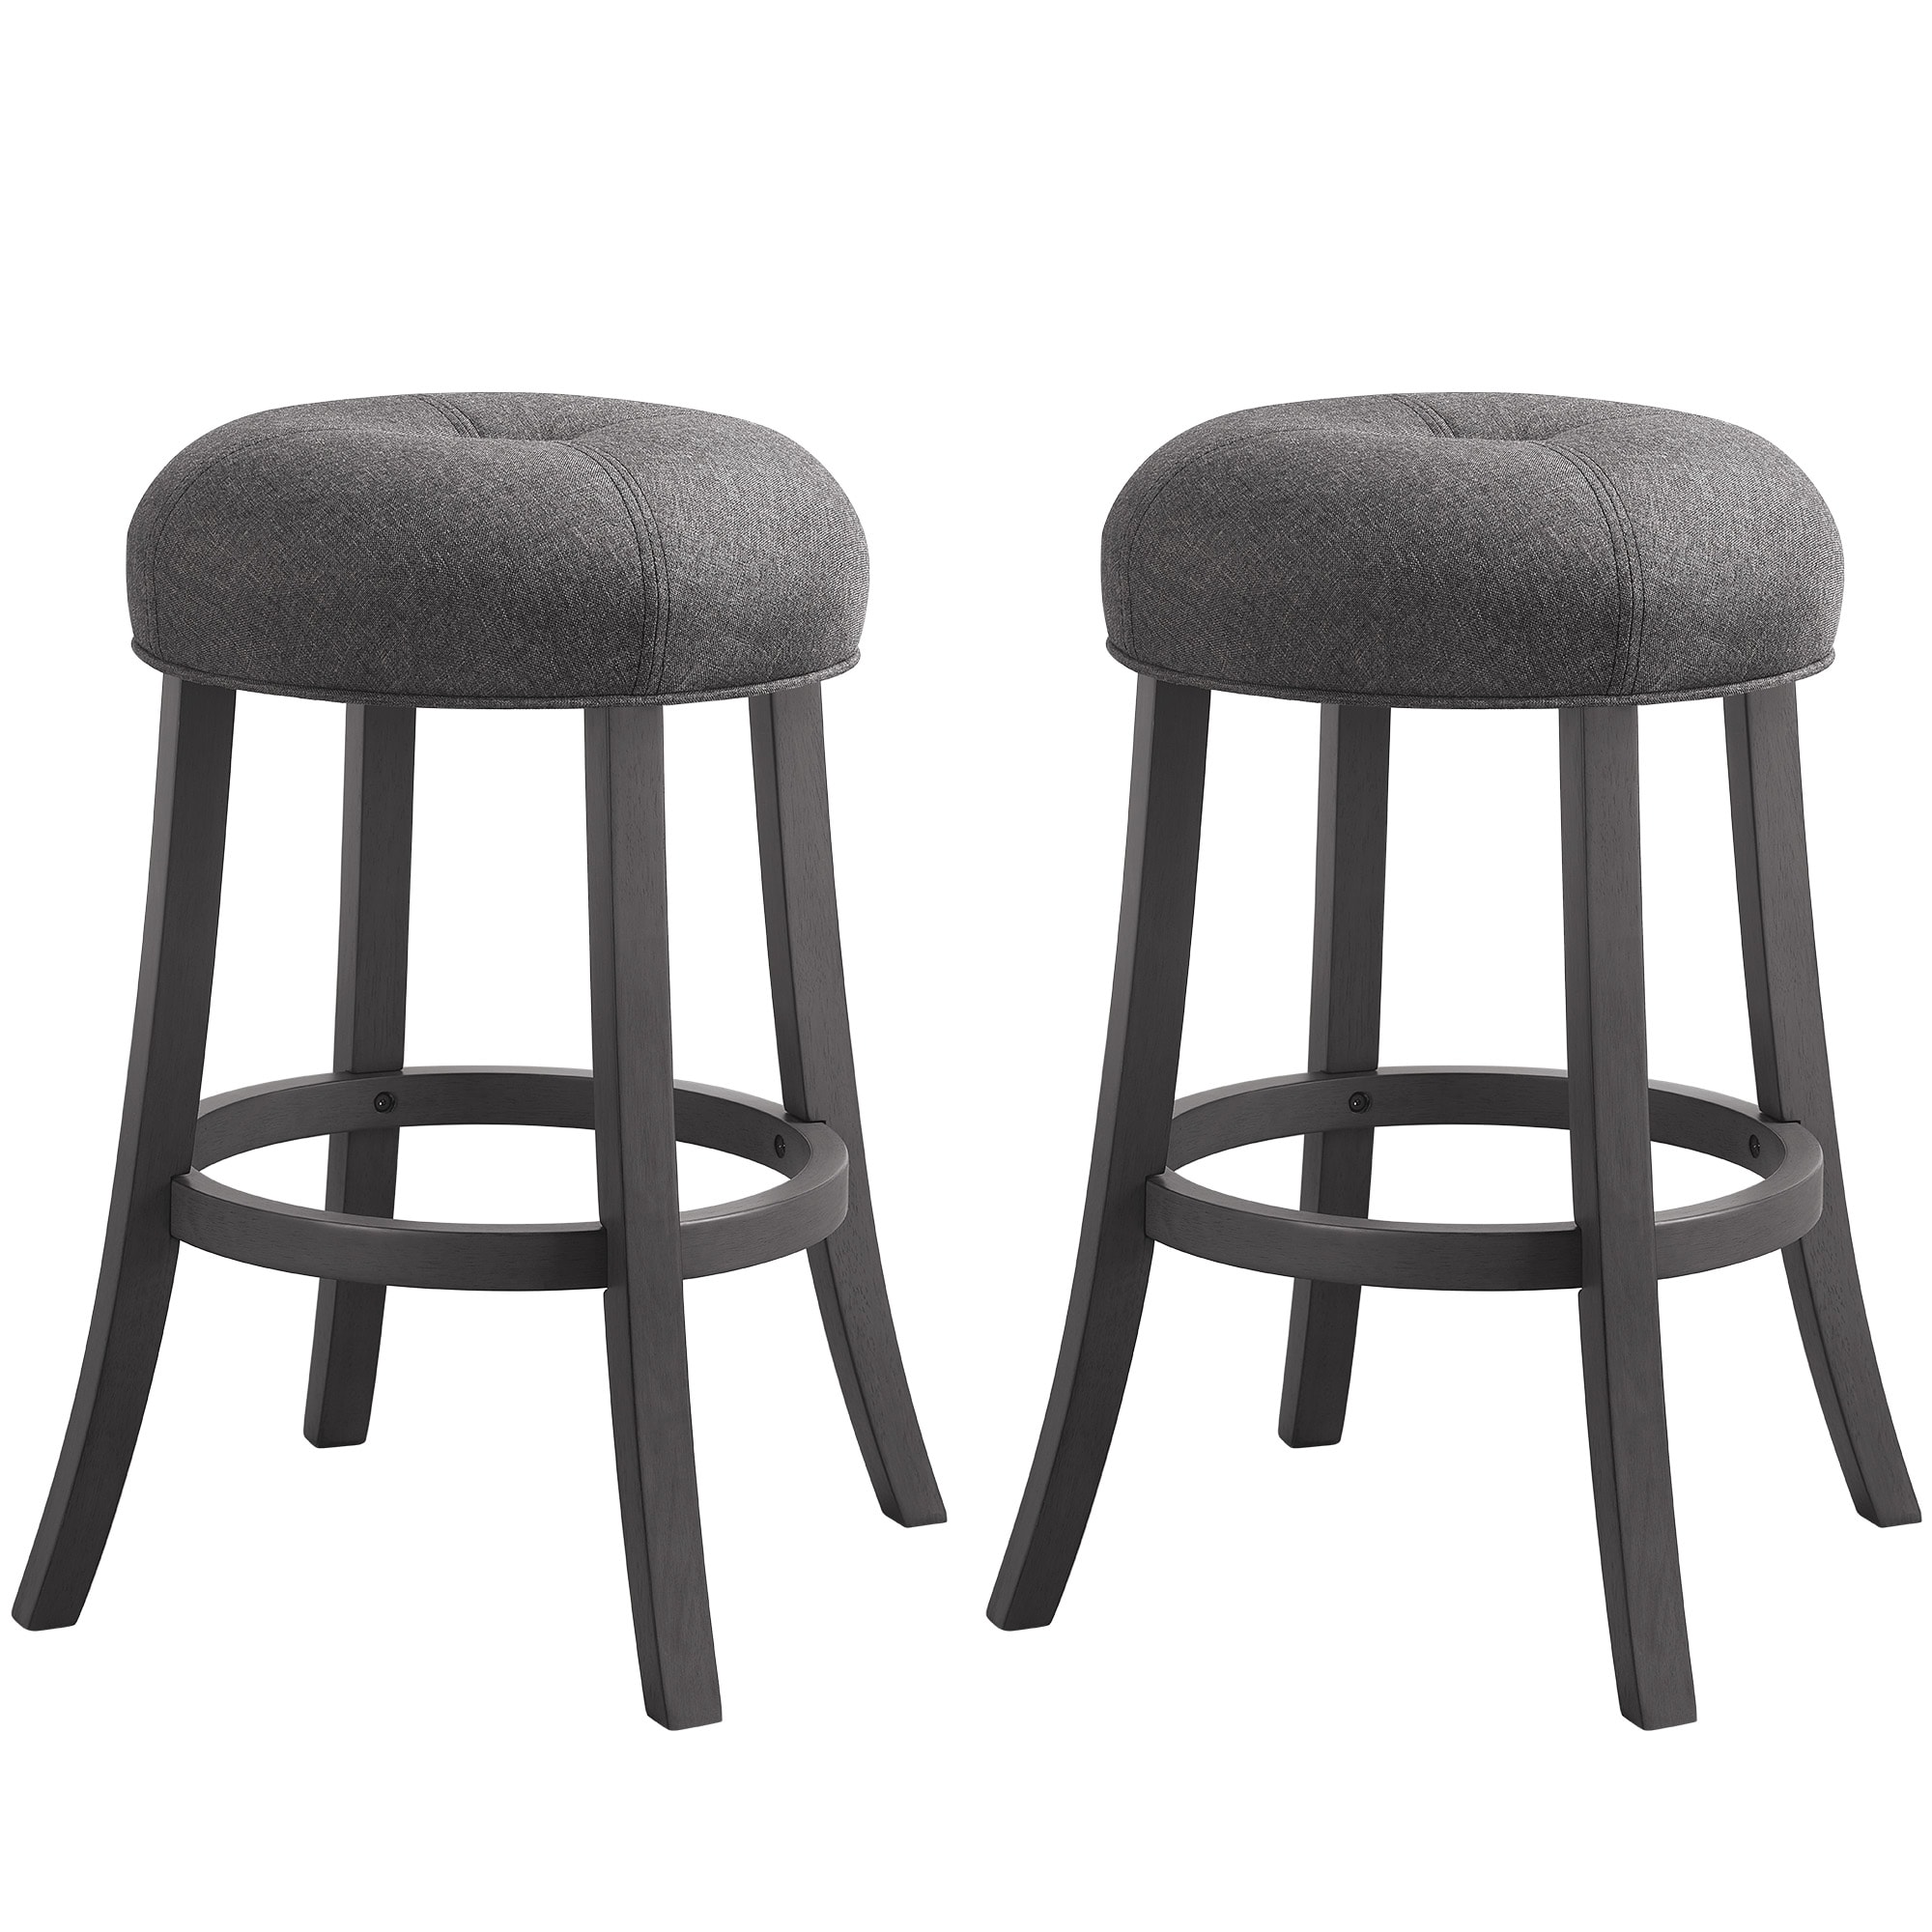 Buy Carave Bar Stool online, Bar stools